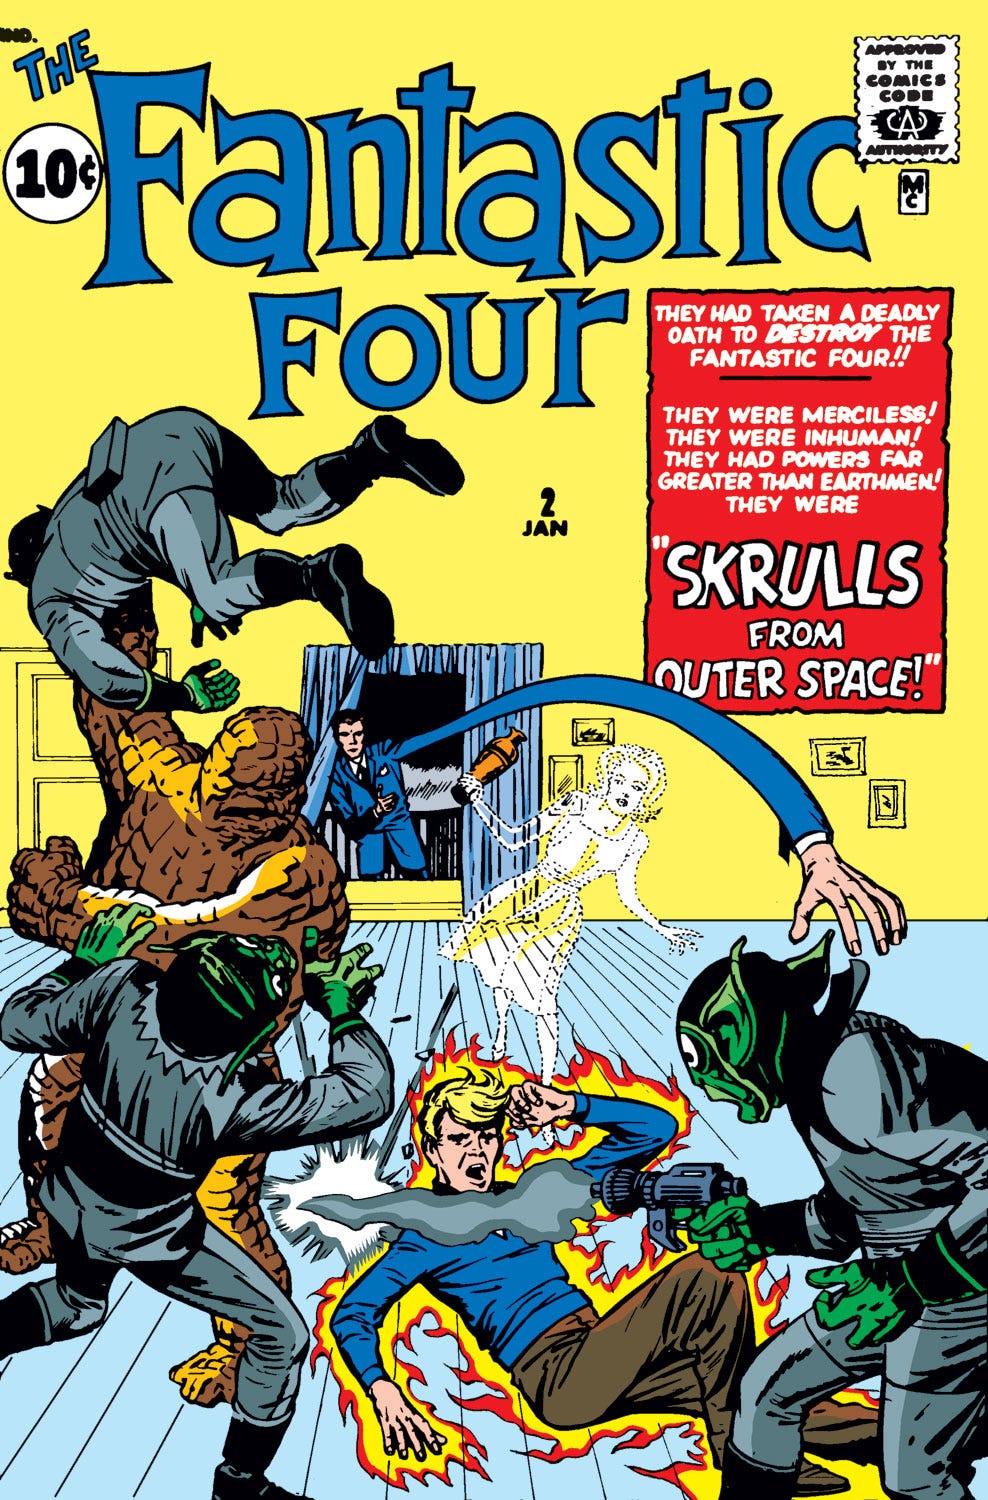 Episode 5: Captured and Pardoned (Fantastic Four #2, Part 2) -- January 1962